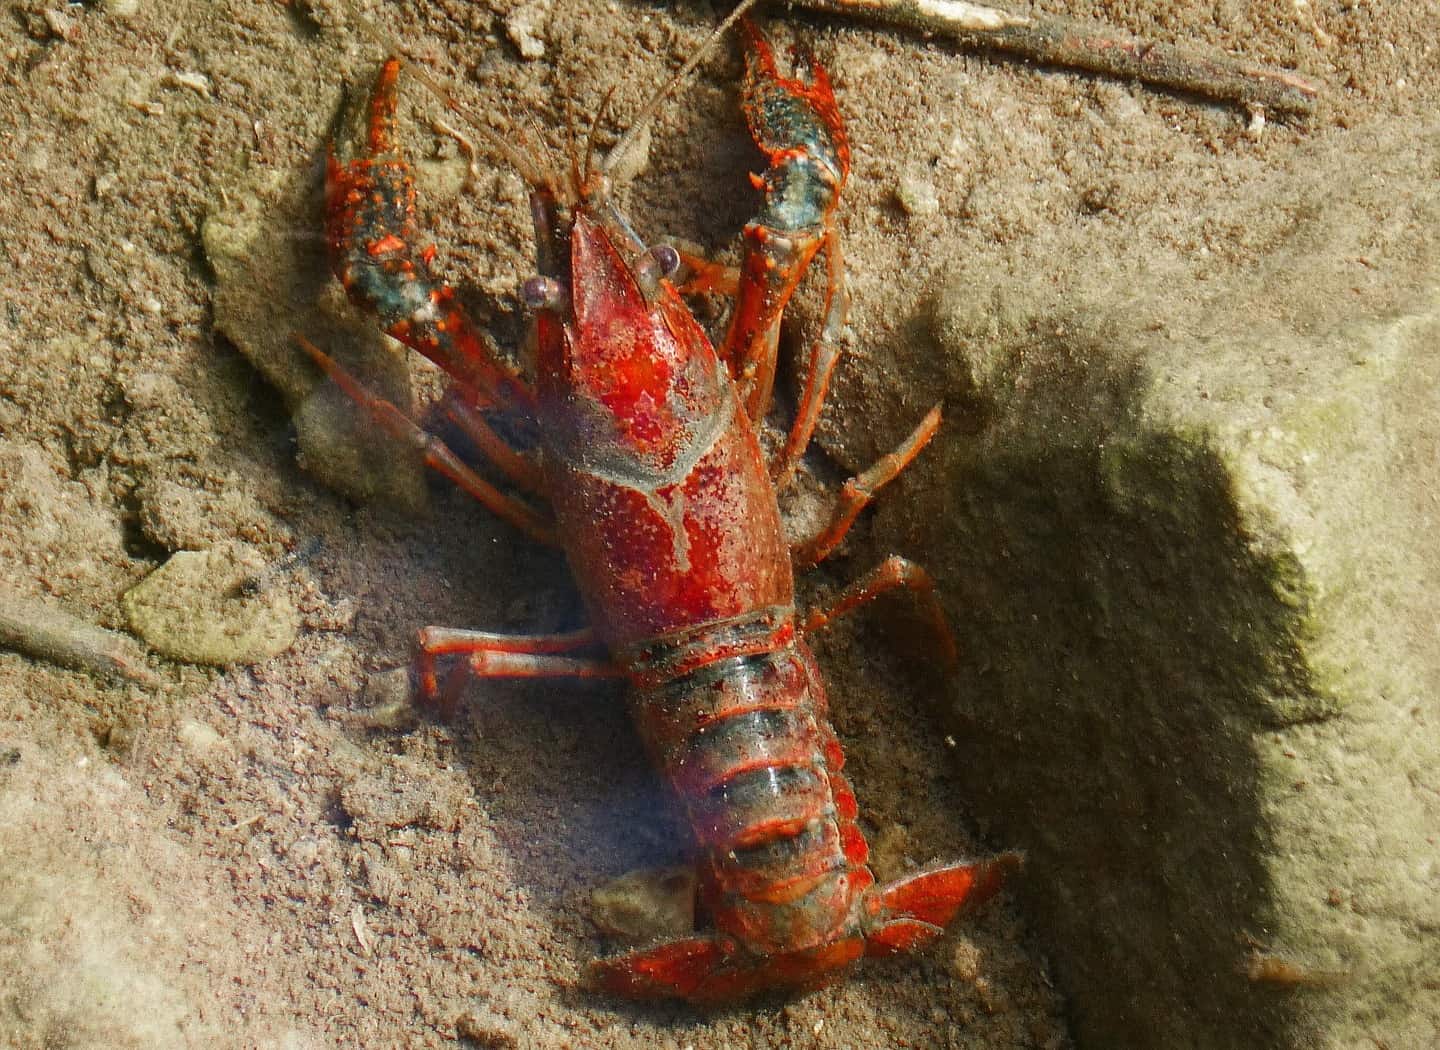 Bagley Small Fry Crayfish 2, Red Crayfish